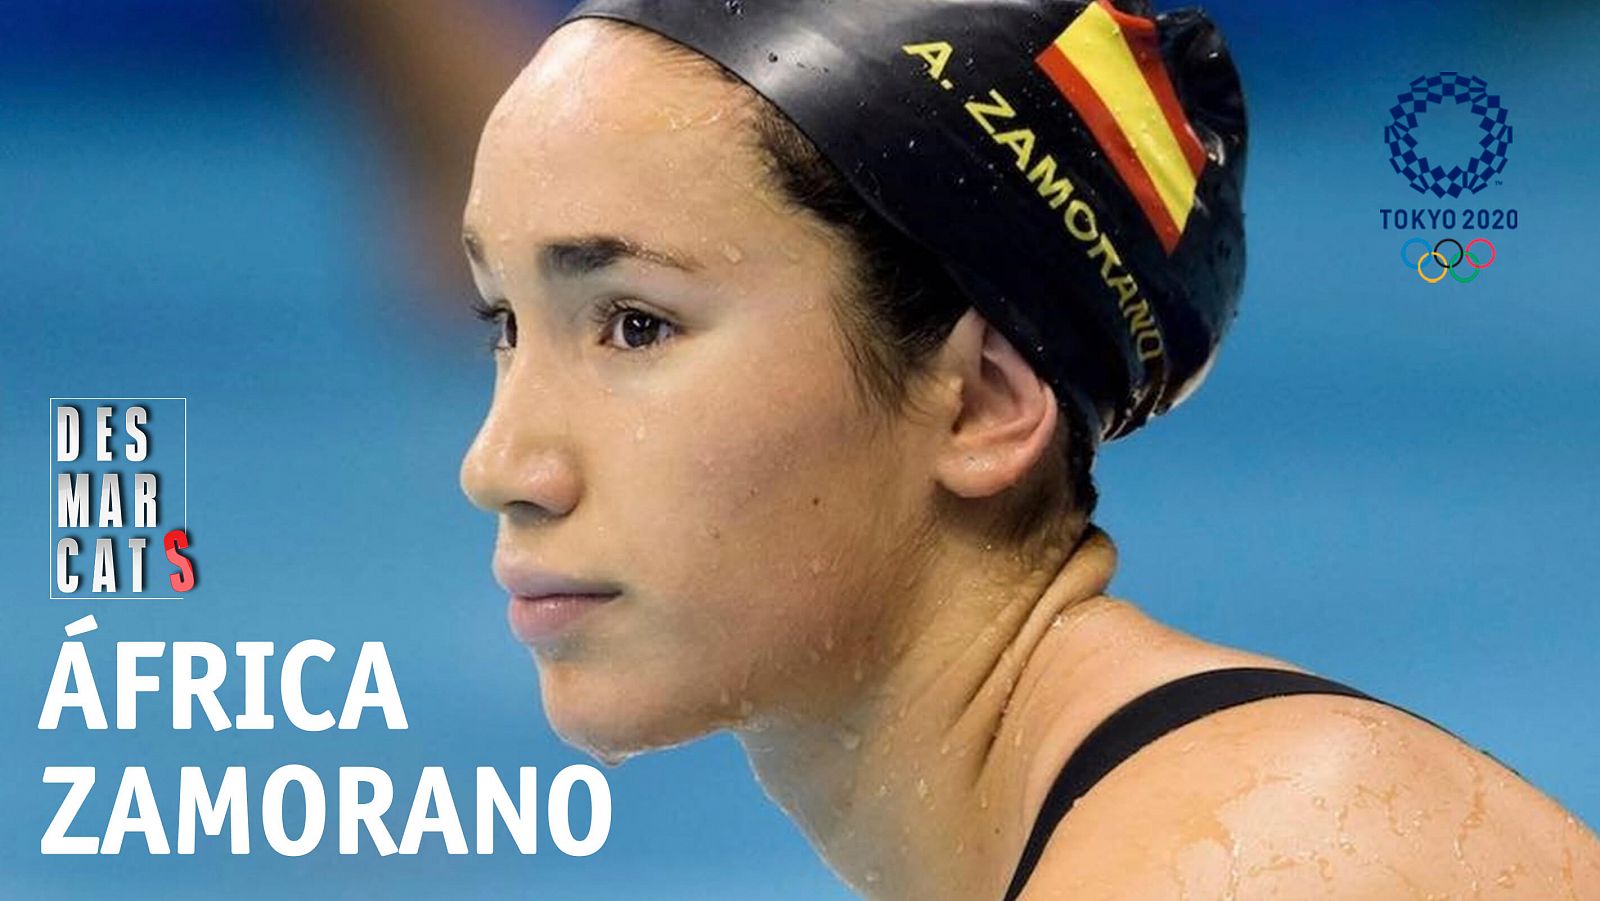 Desmarcats - África Zamorano, nedadora olímpica del CN Sant Andreu